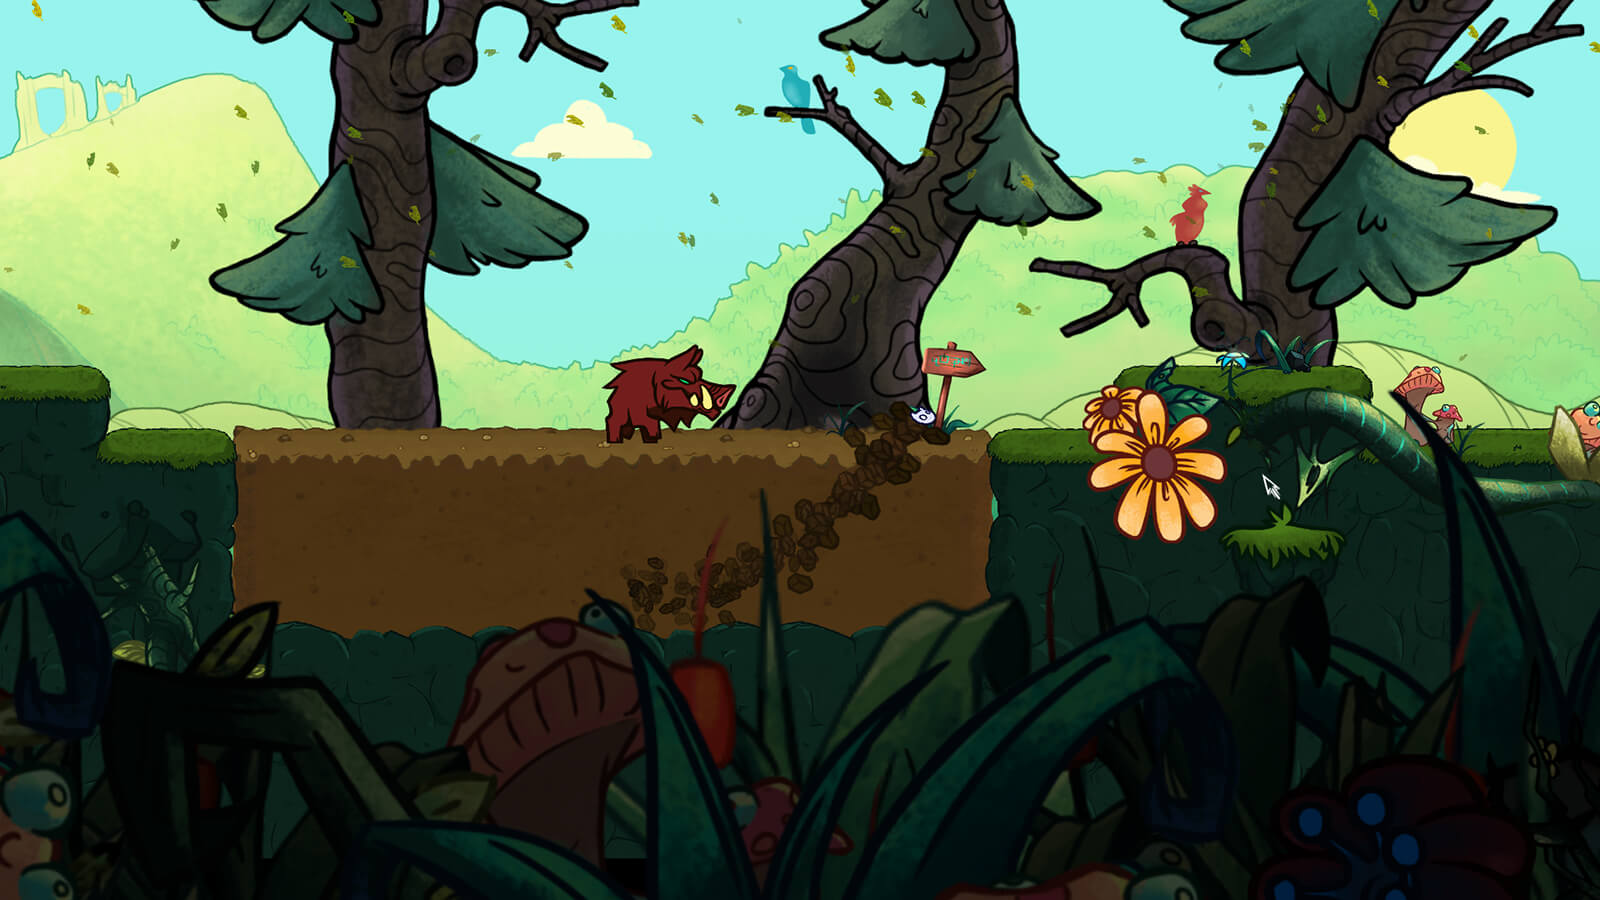 Screenshot featuring a wart hog in a forest setting